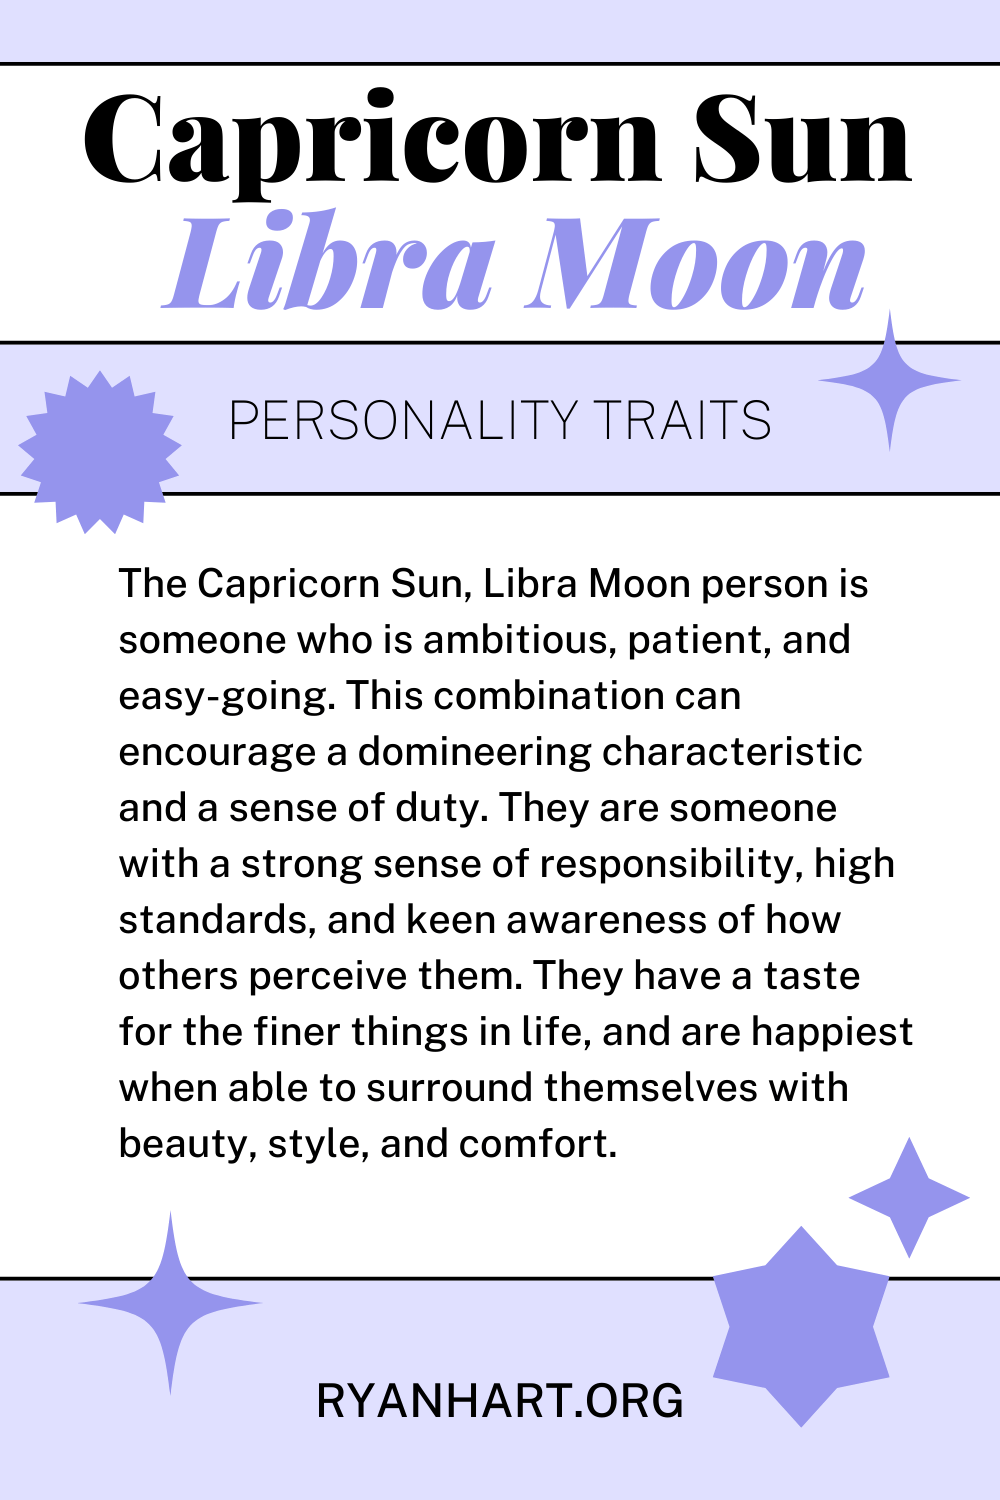 Capricorn Sun Libra Moon Description